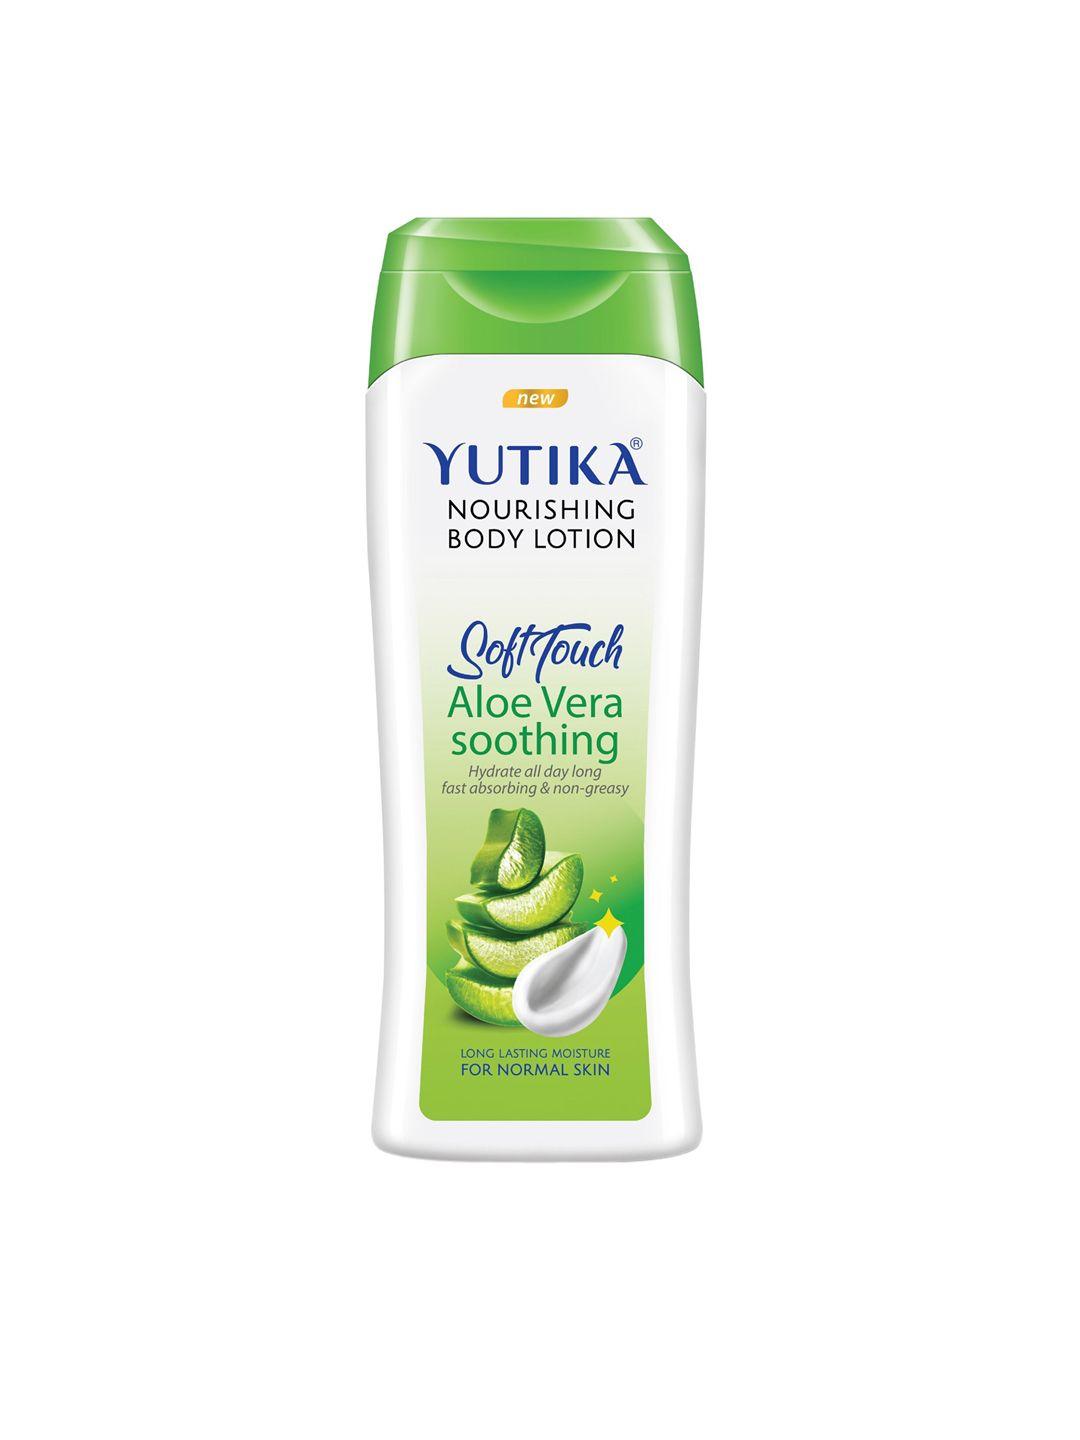 yutika nourishing body lotion soft touch aloe vera soothing - 300 ml